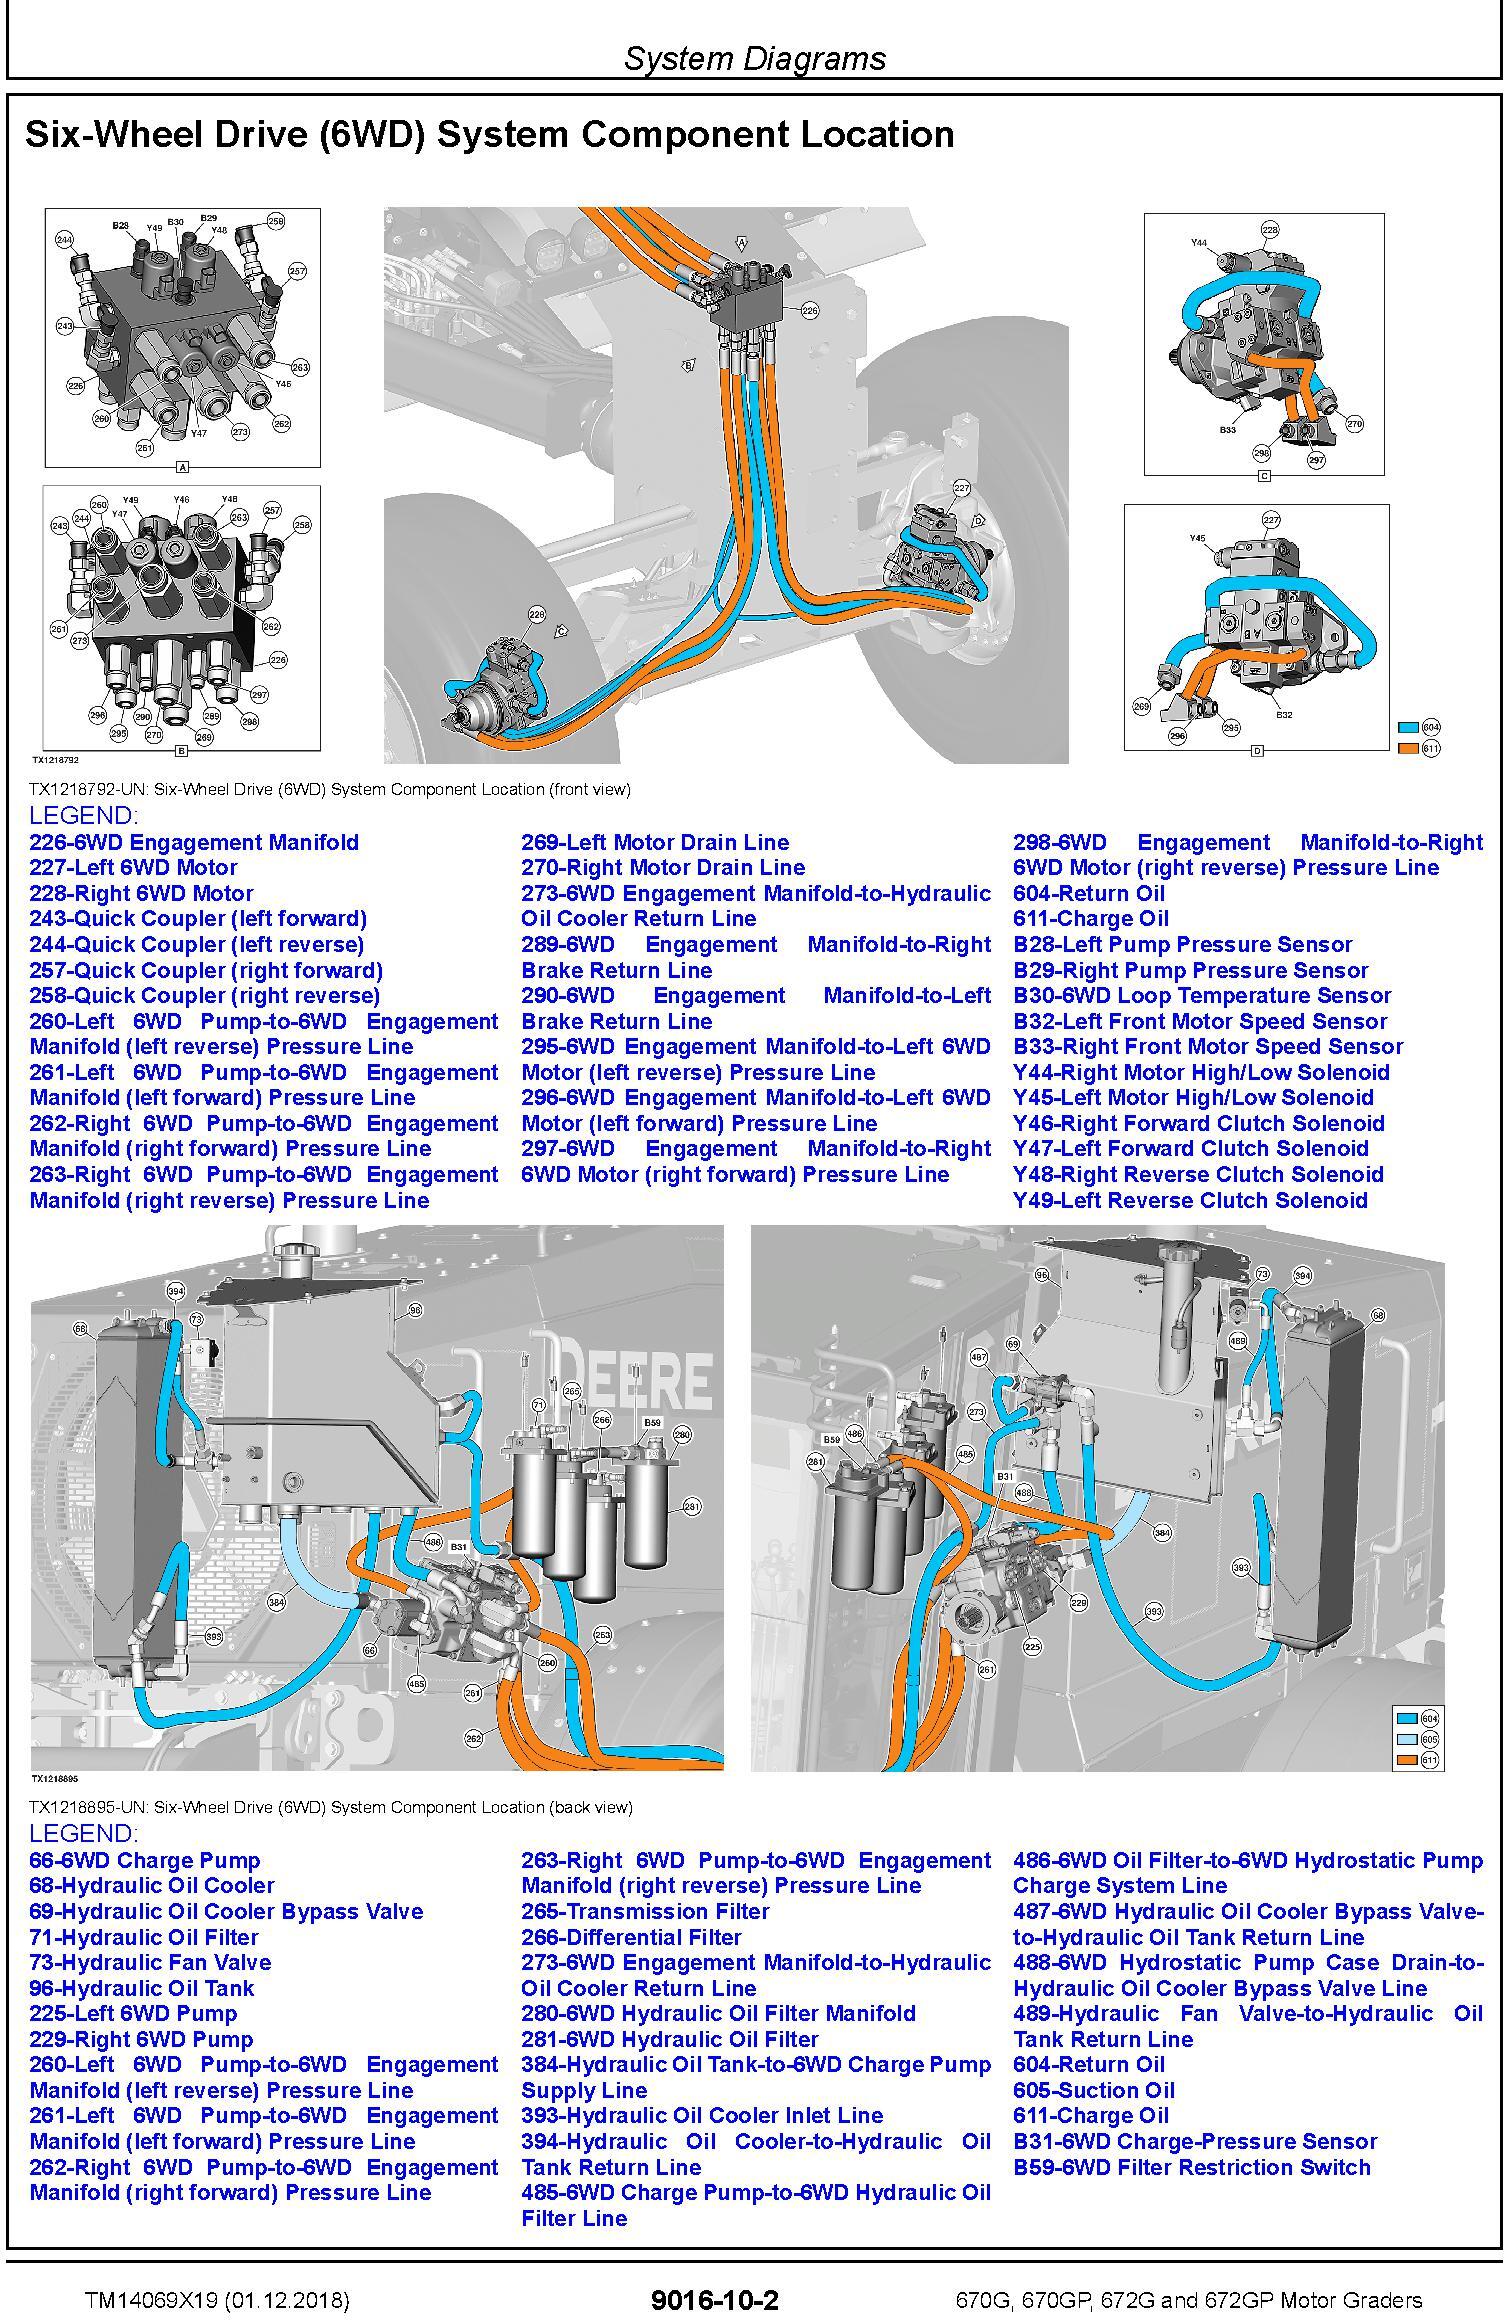 John Deere 670G, 670GP, 672G and 672GP Motor Graders Operation & Test Technical Manual (TM14069X19) - 3